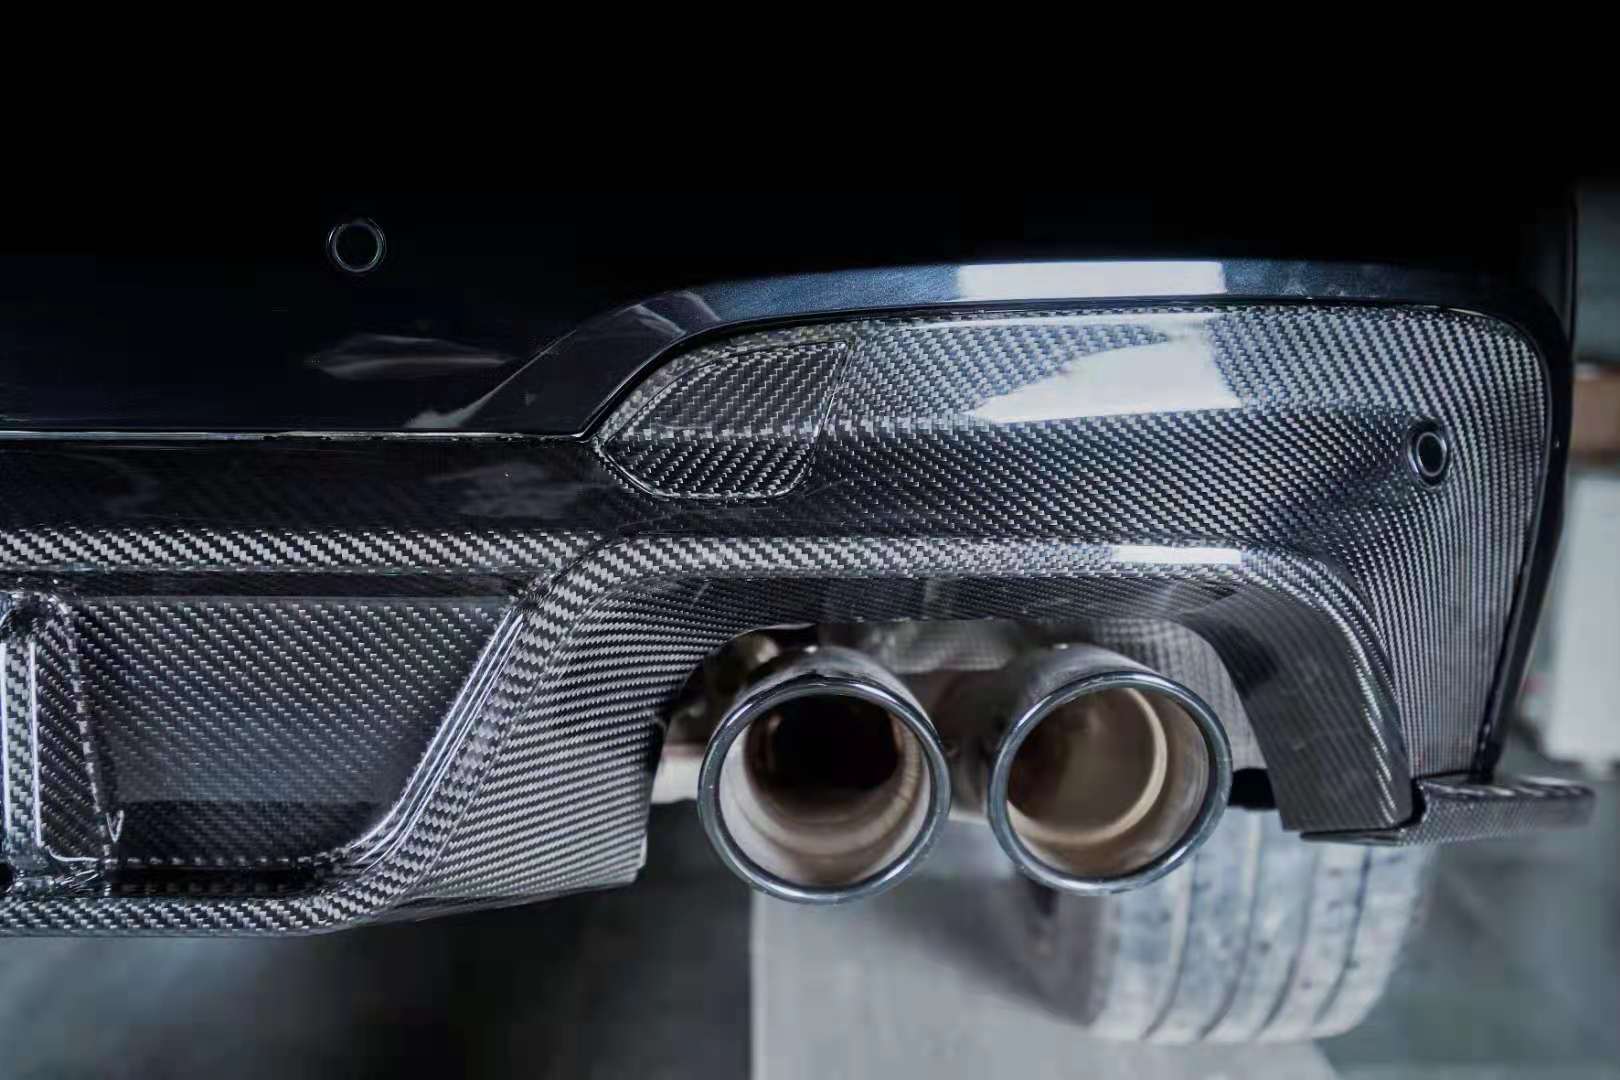 Karbel Carbon Dry Carbon Fiber Rear Diffuser for BMW X3 & X3M & X3MC G01 F97 2019-2021